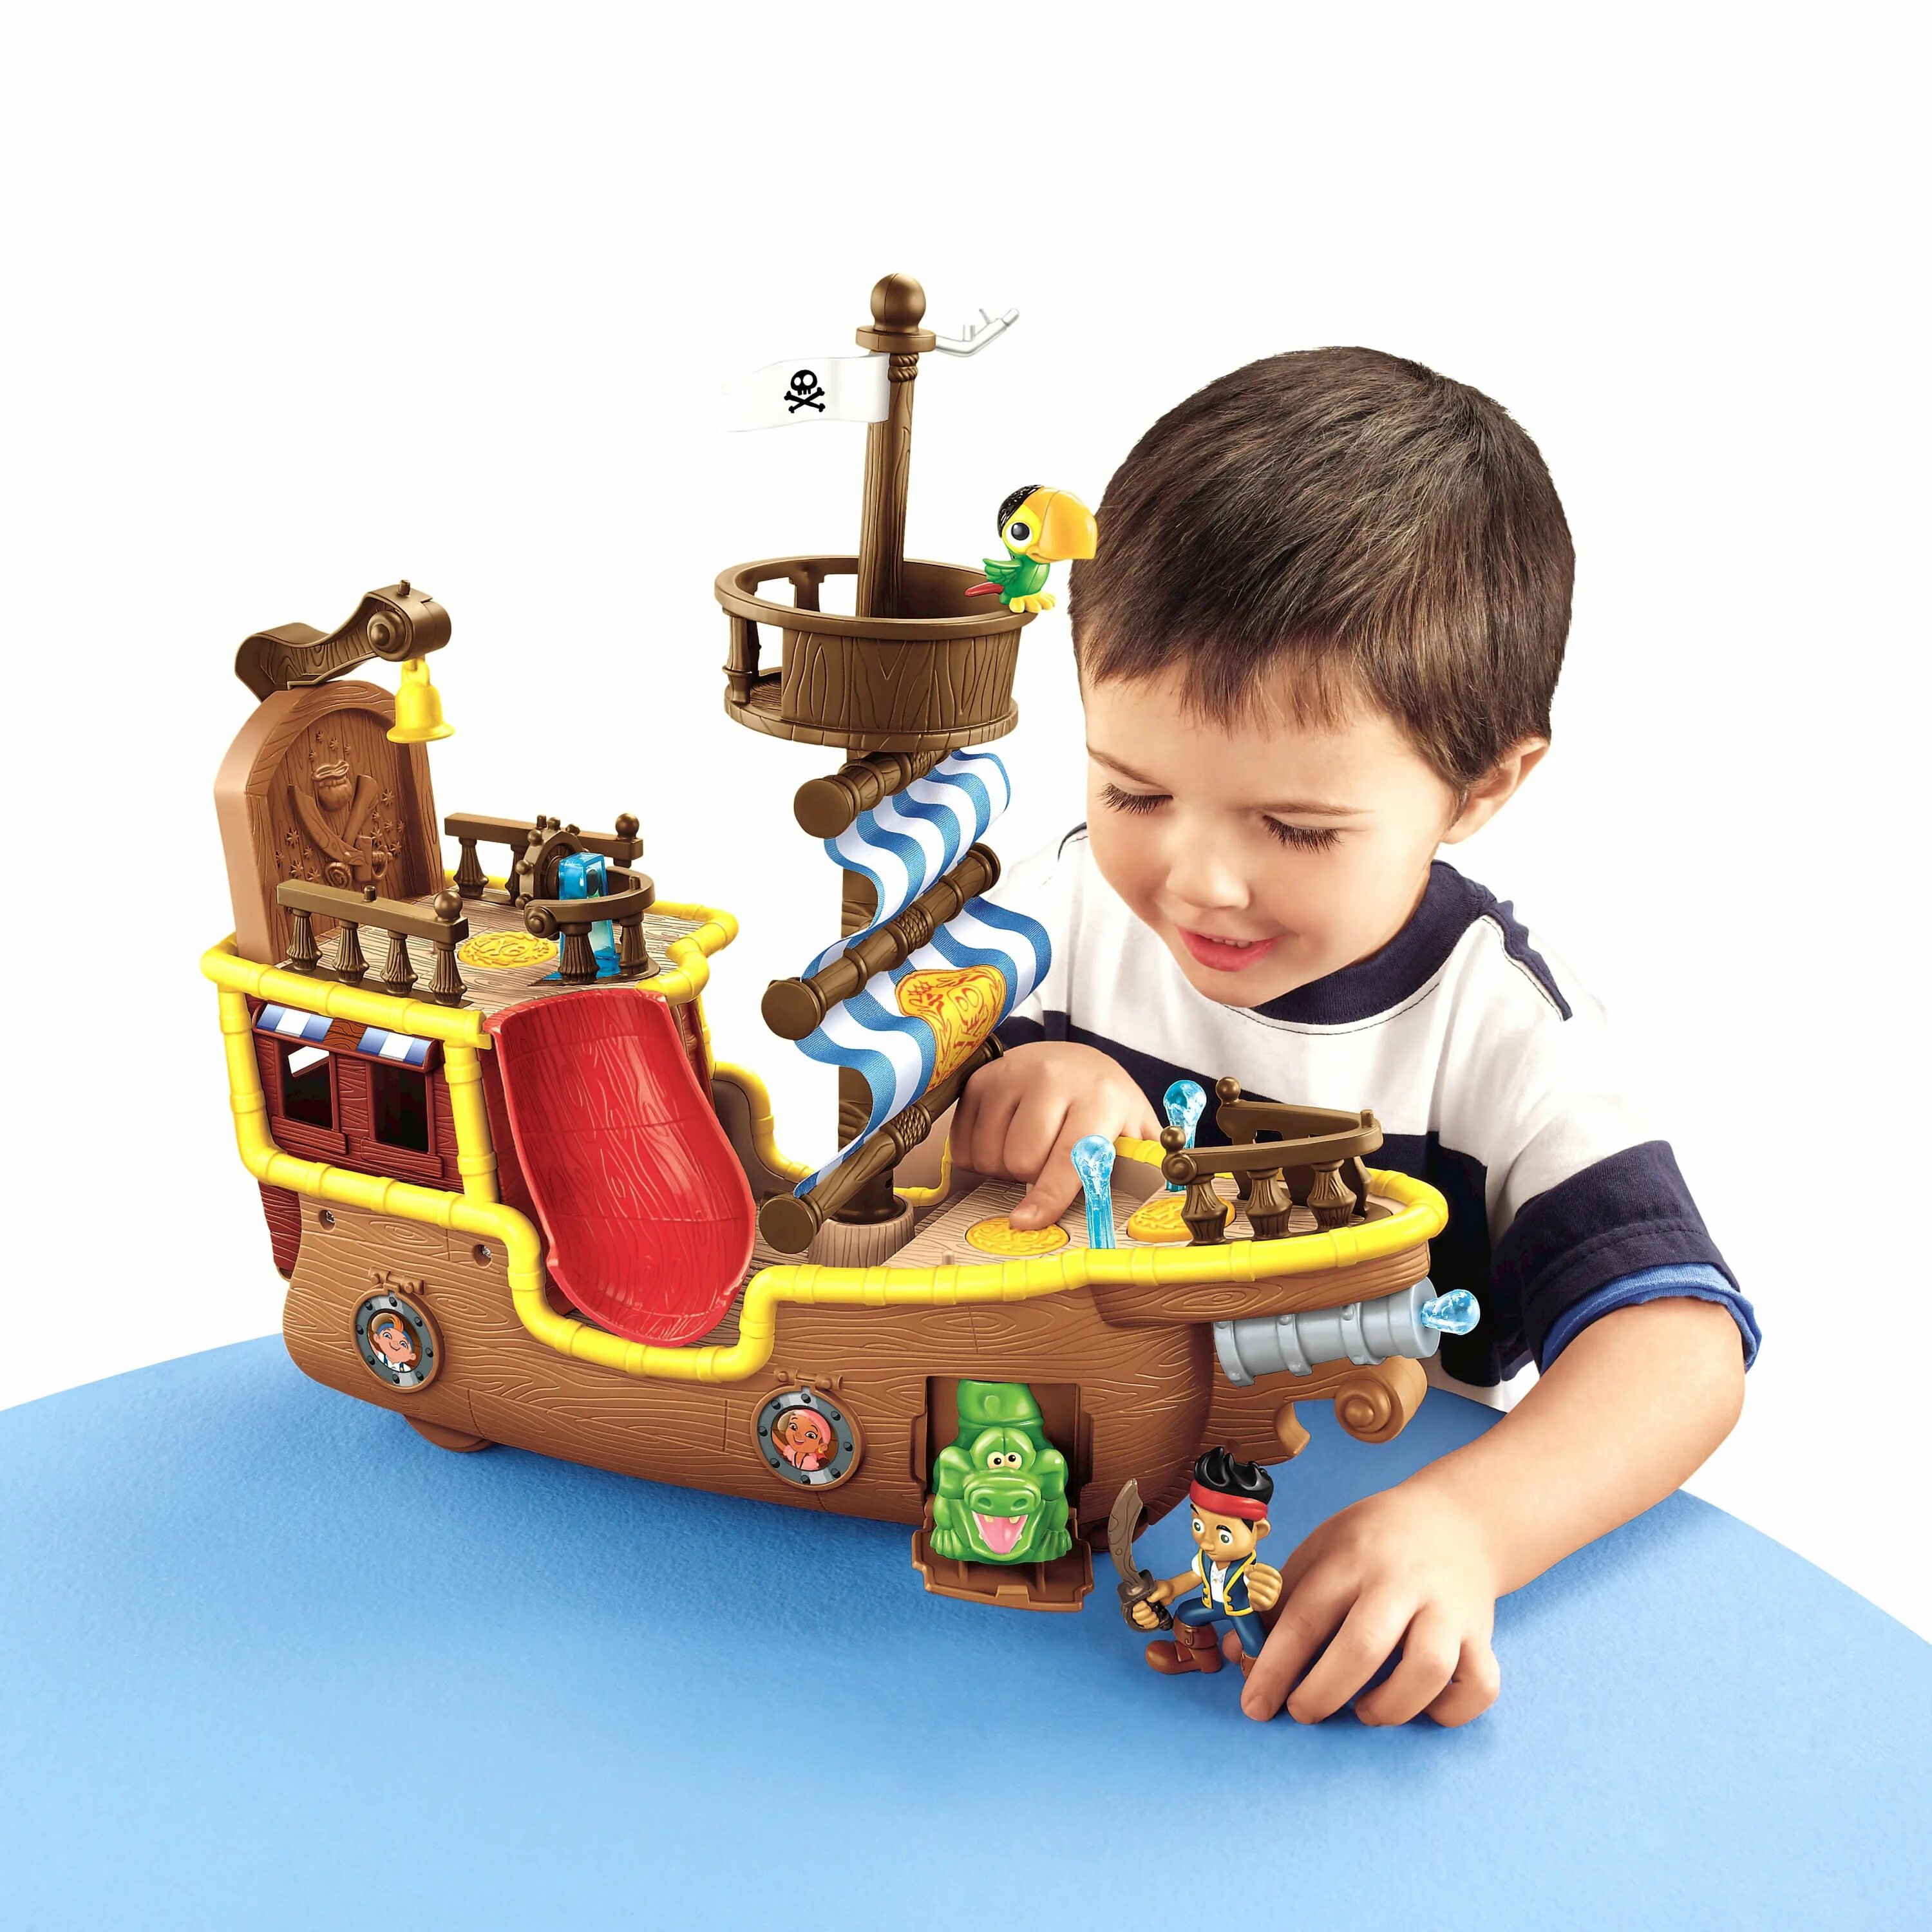 Jake and the Neverland Pirates игрушки. Пираты Нетландии корабль. Пиратский корабль Fisher Price. Пиратский корабль игрушка Fisher Price. Игрушки год и восемь